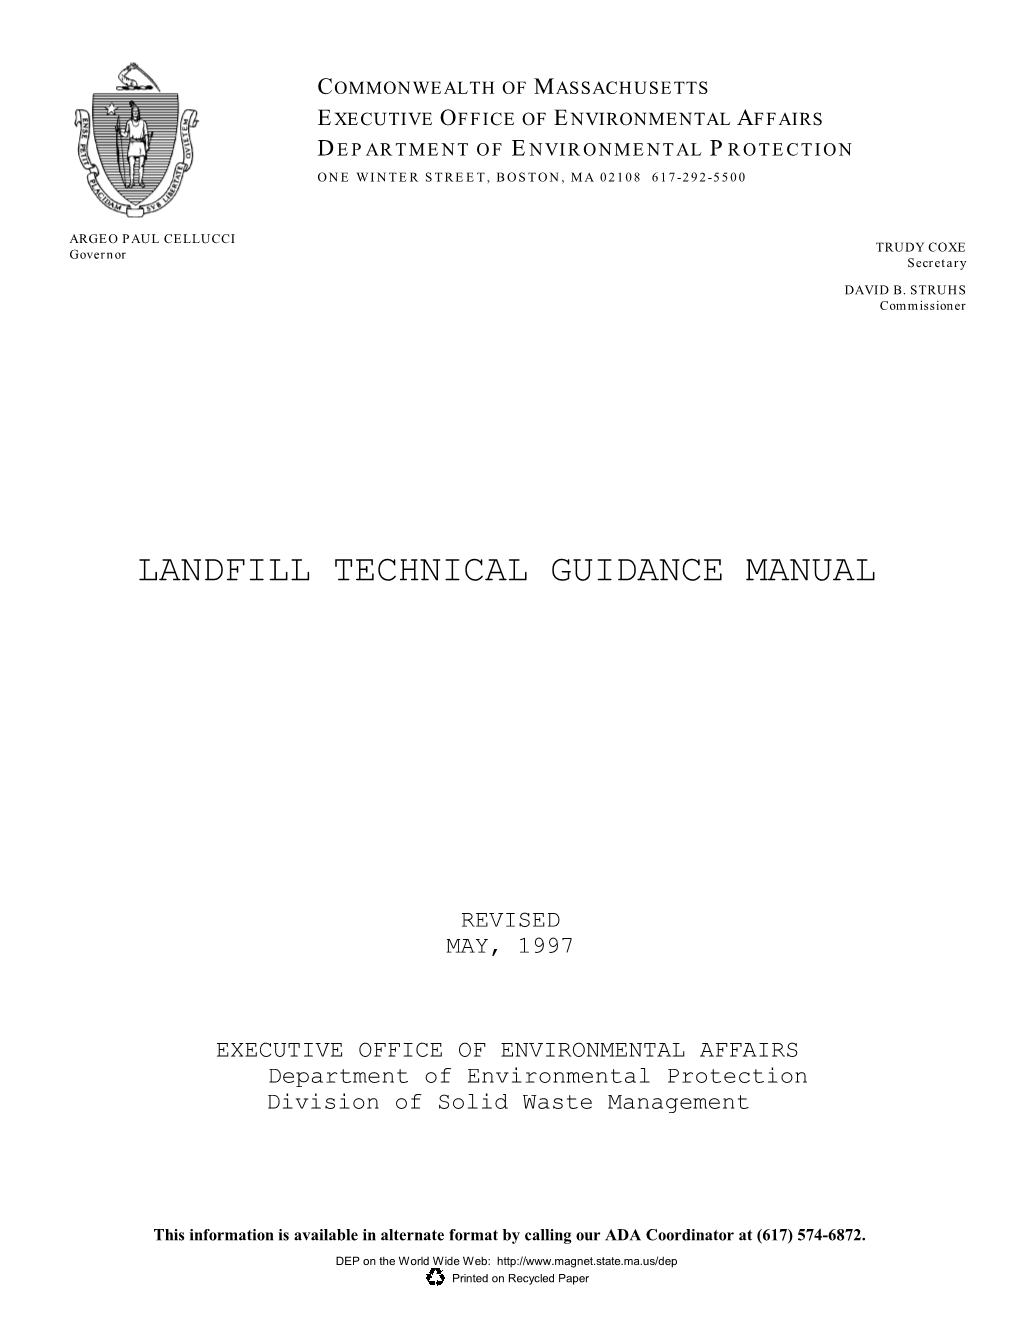 Landfill Technical Guidance Manual